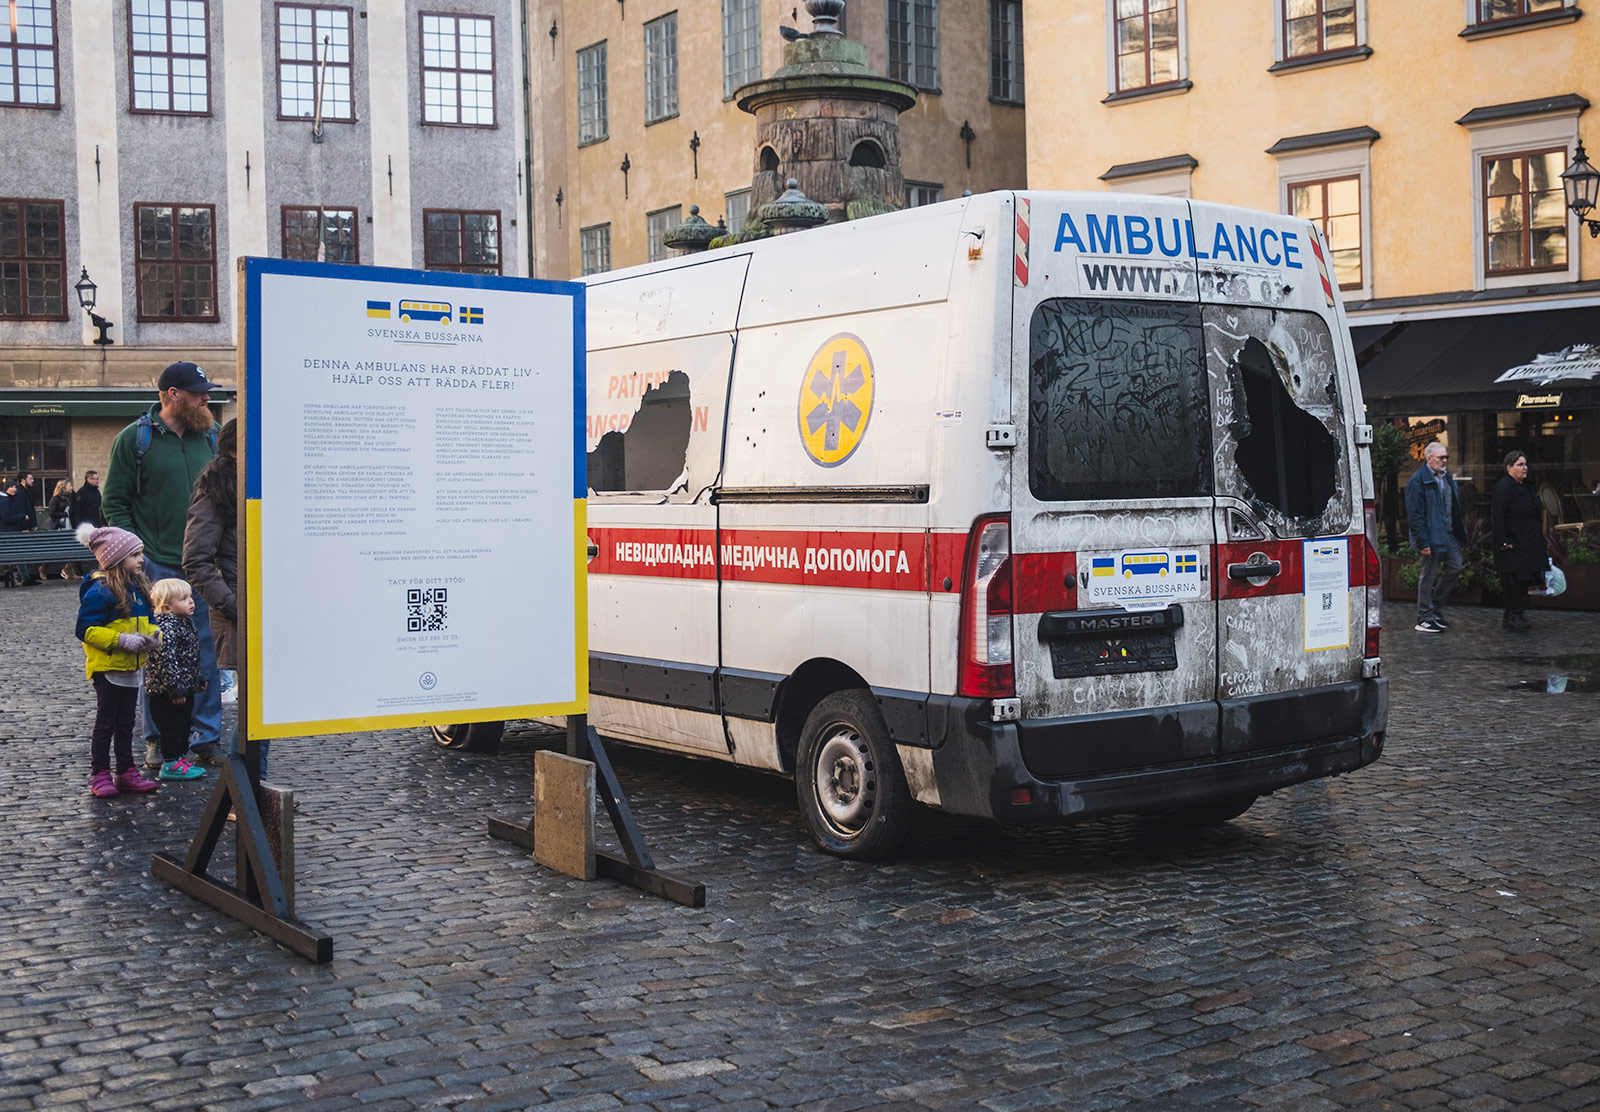 Broken ambulance with holes